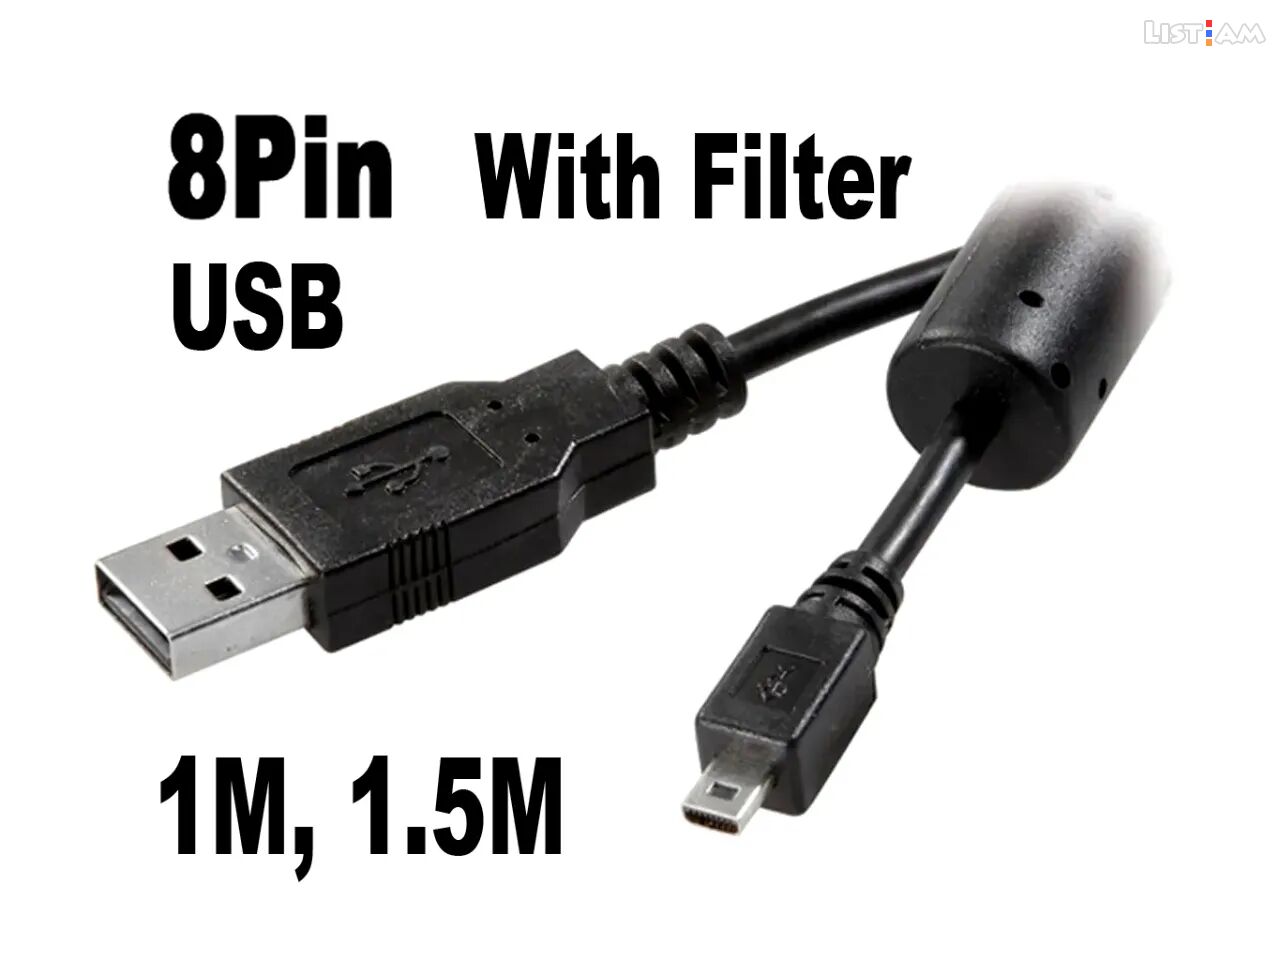 MiniUSB To USB2.0